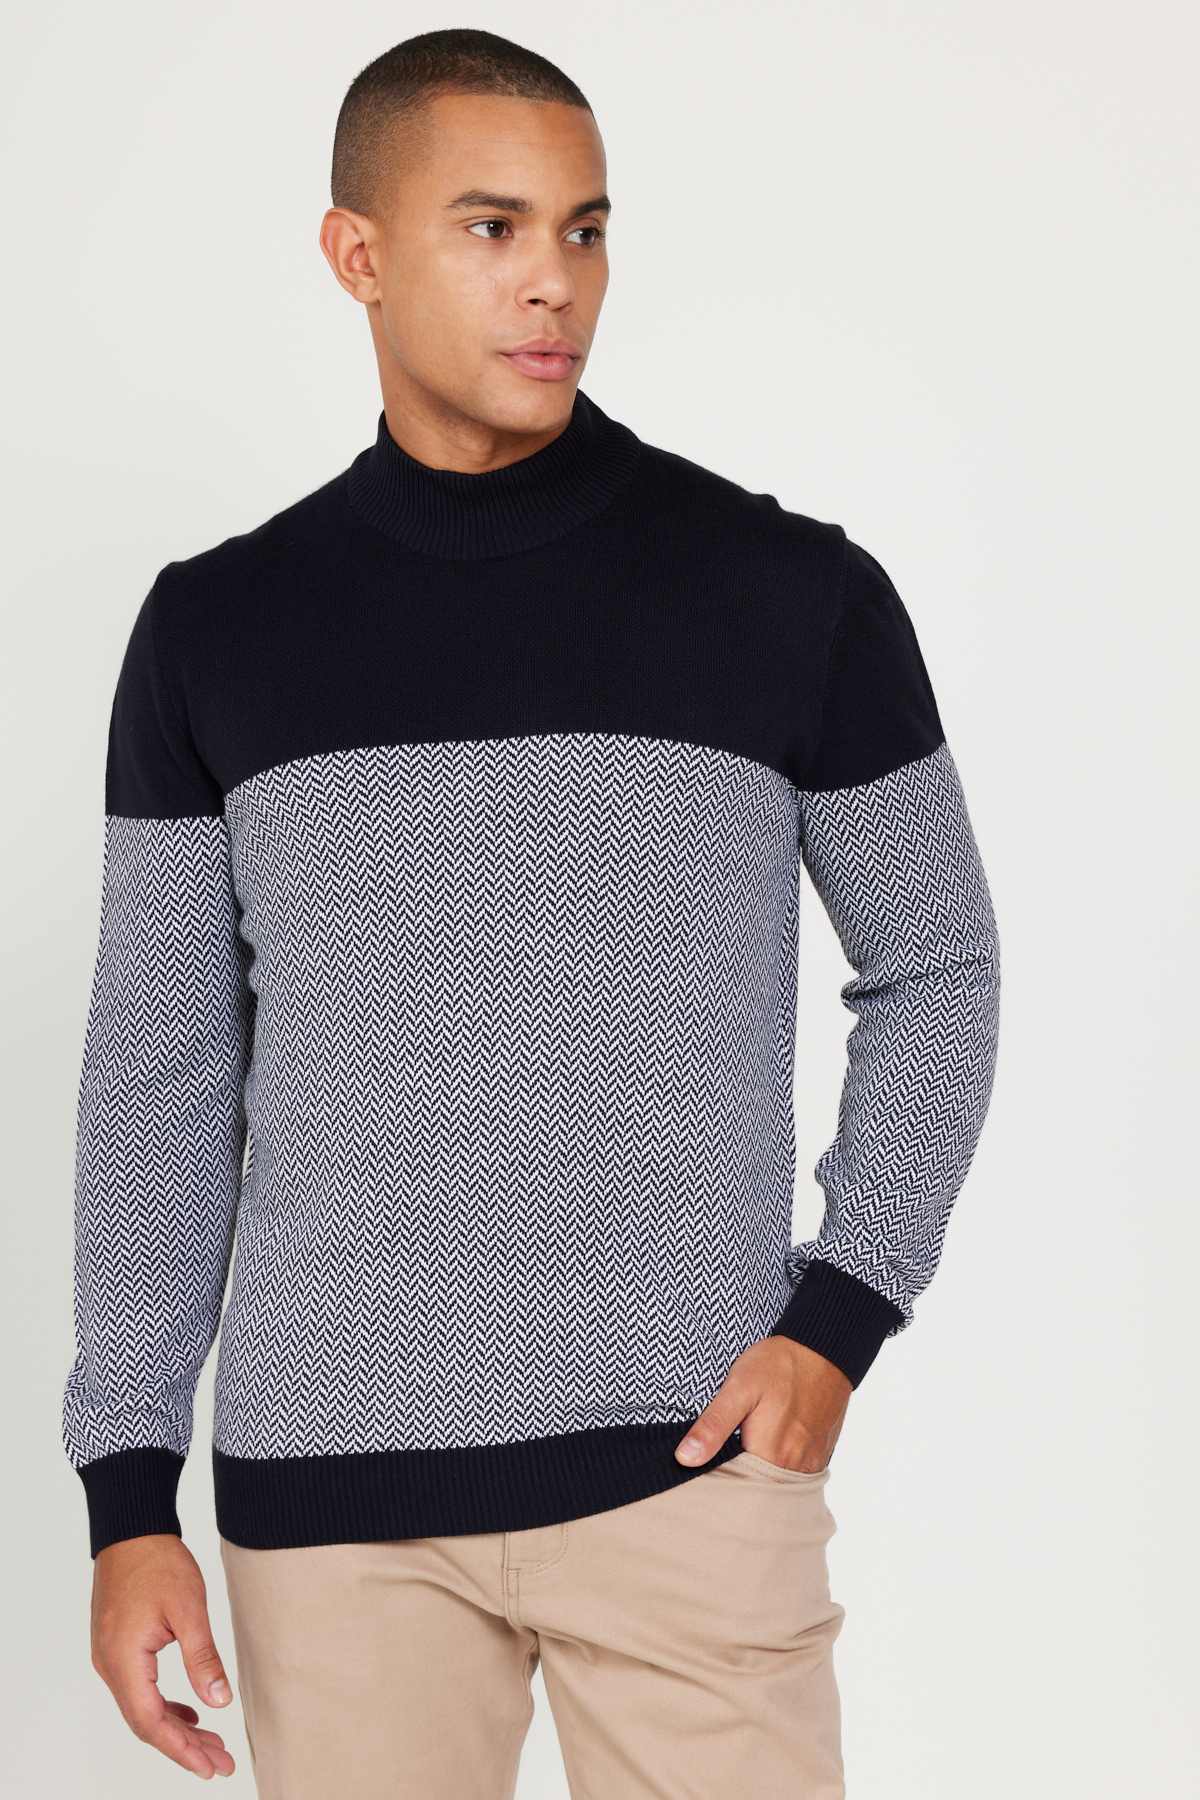 Levně ALTINYILDIZ CLASSICS Men's Navy Blue-Cream Standard Fit Normal Cut Half Turtleneck Patterned Knitwear Sweater.